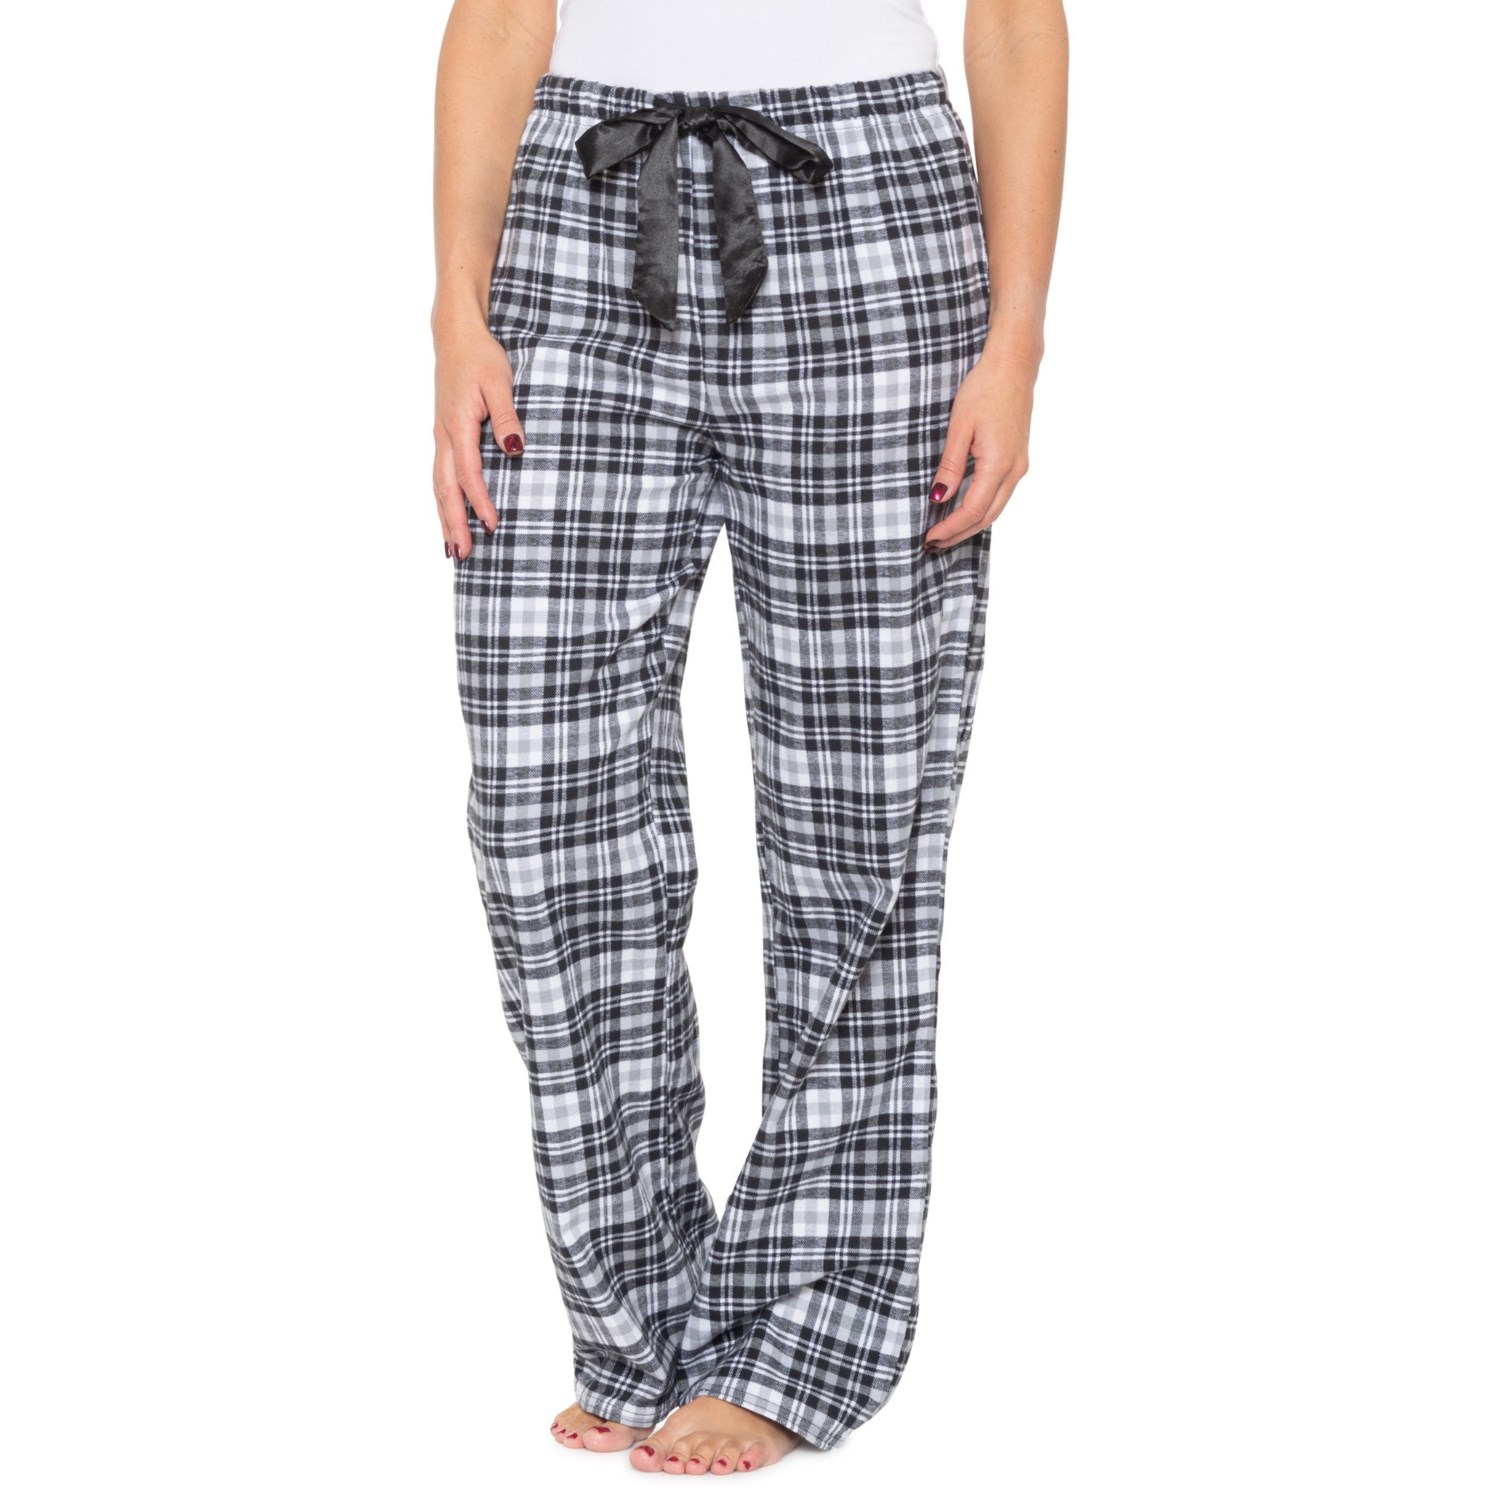 Telluride Yarn-Dyed Flannel Sleep Pants (For Women) - Save 56%